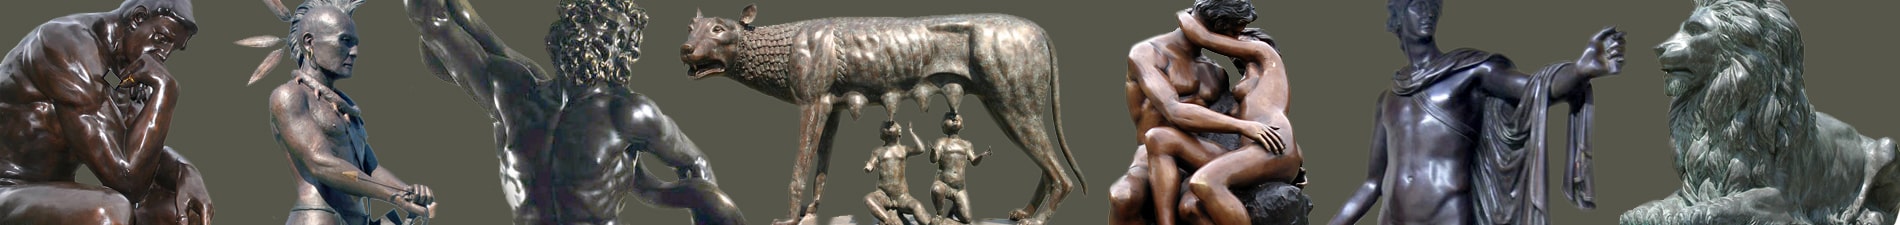 Egyptian bronze sculptures